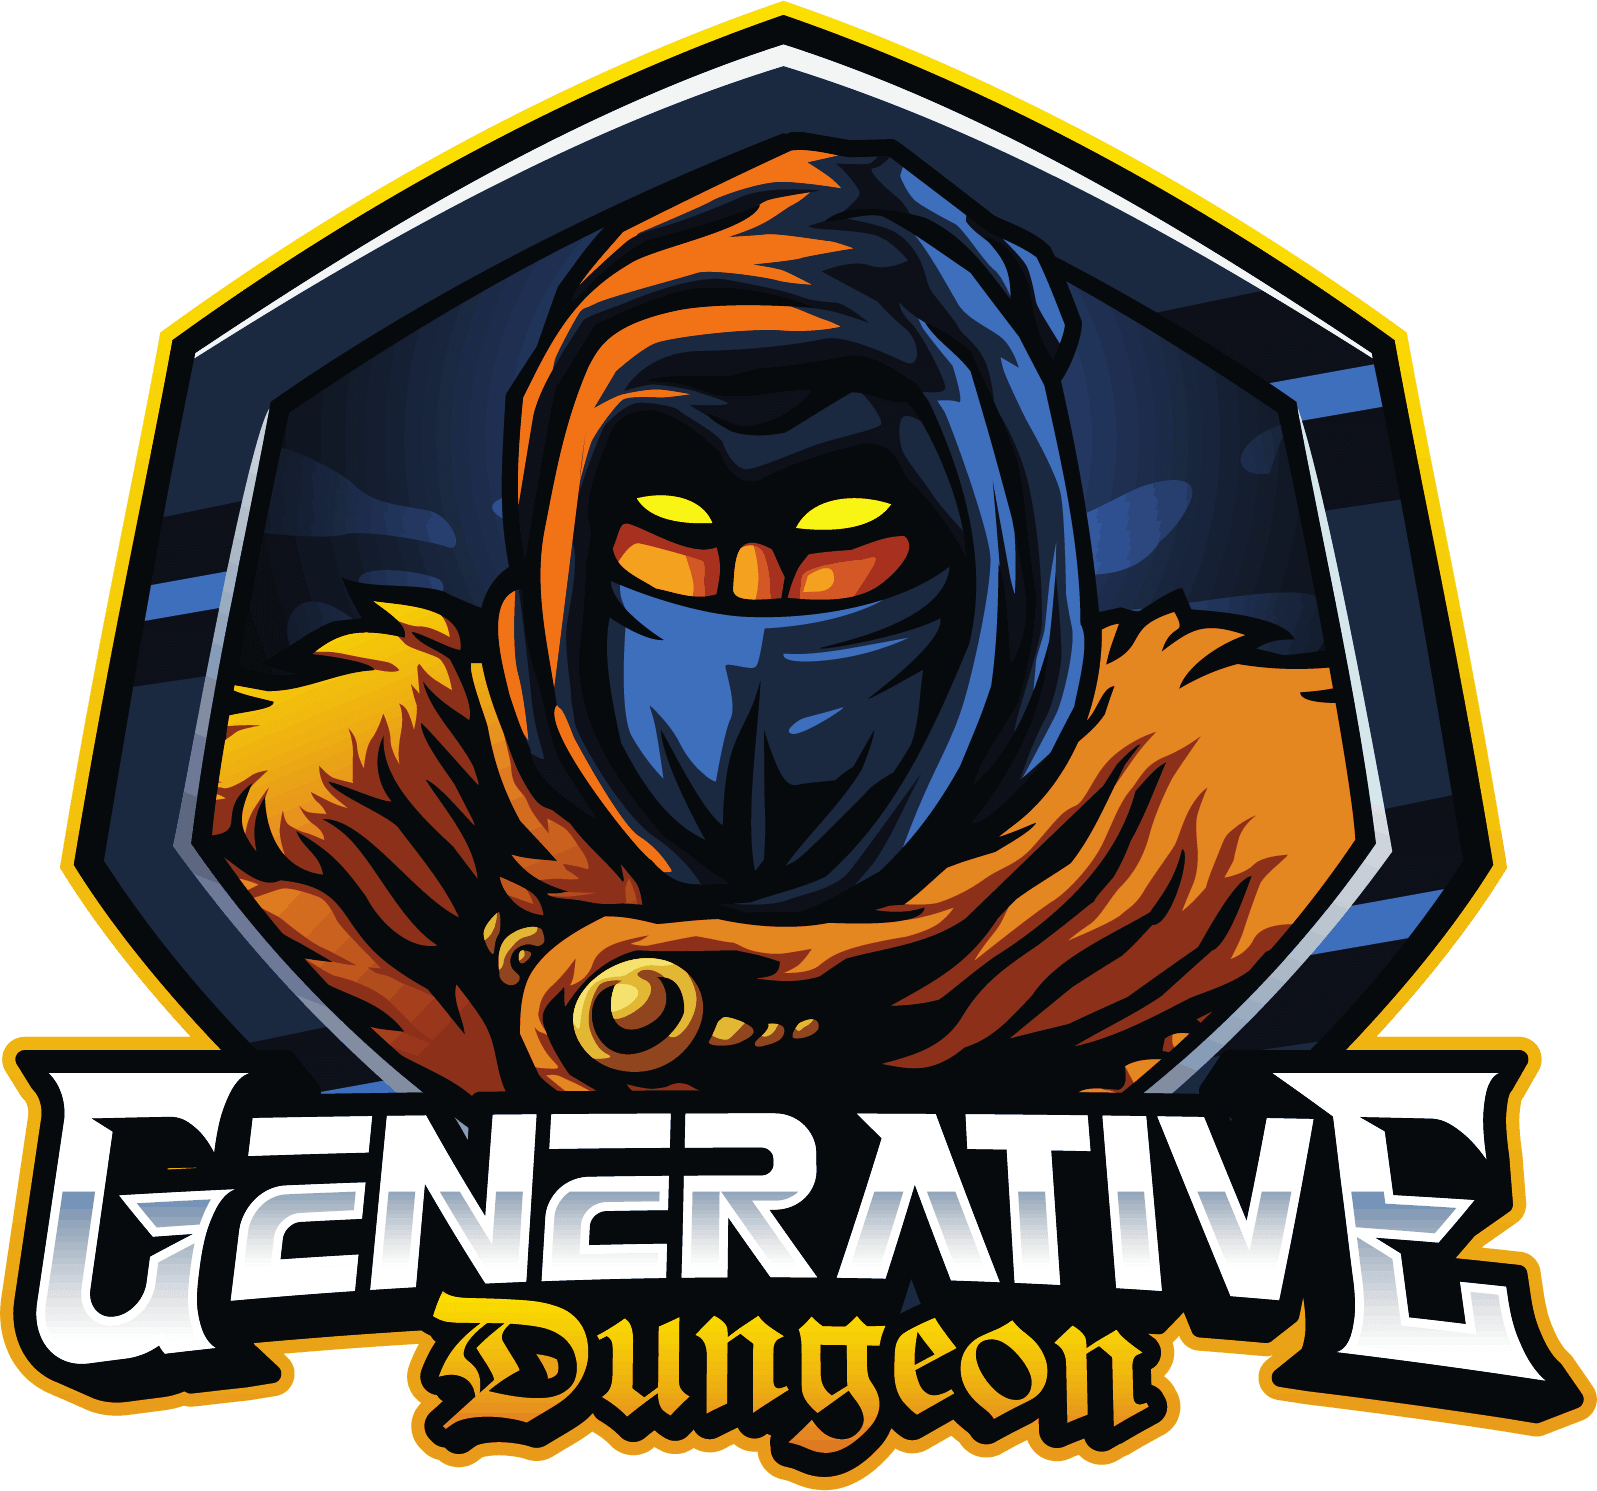 Generative Dungeons